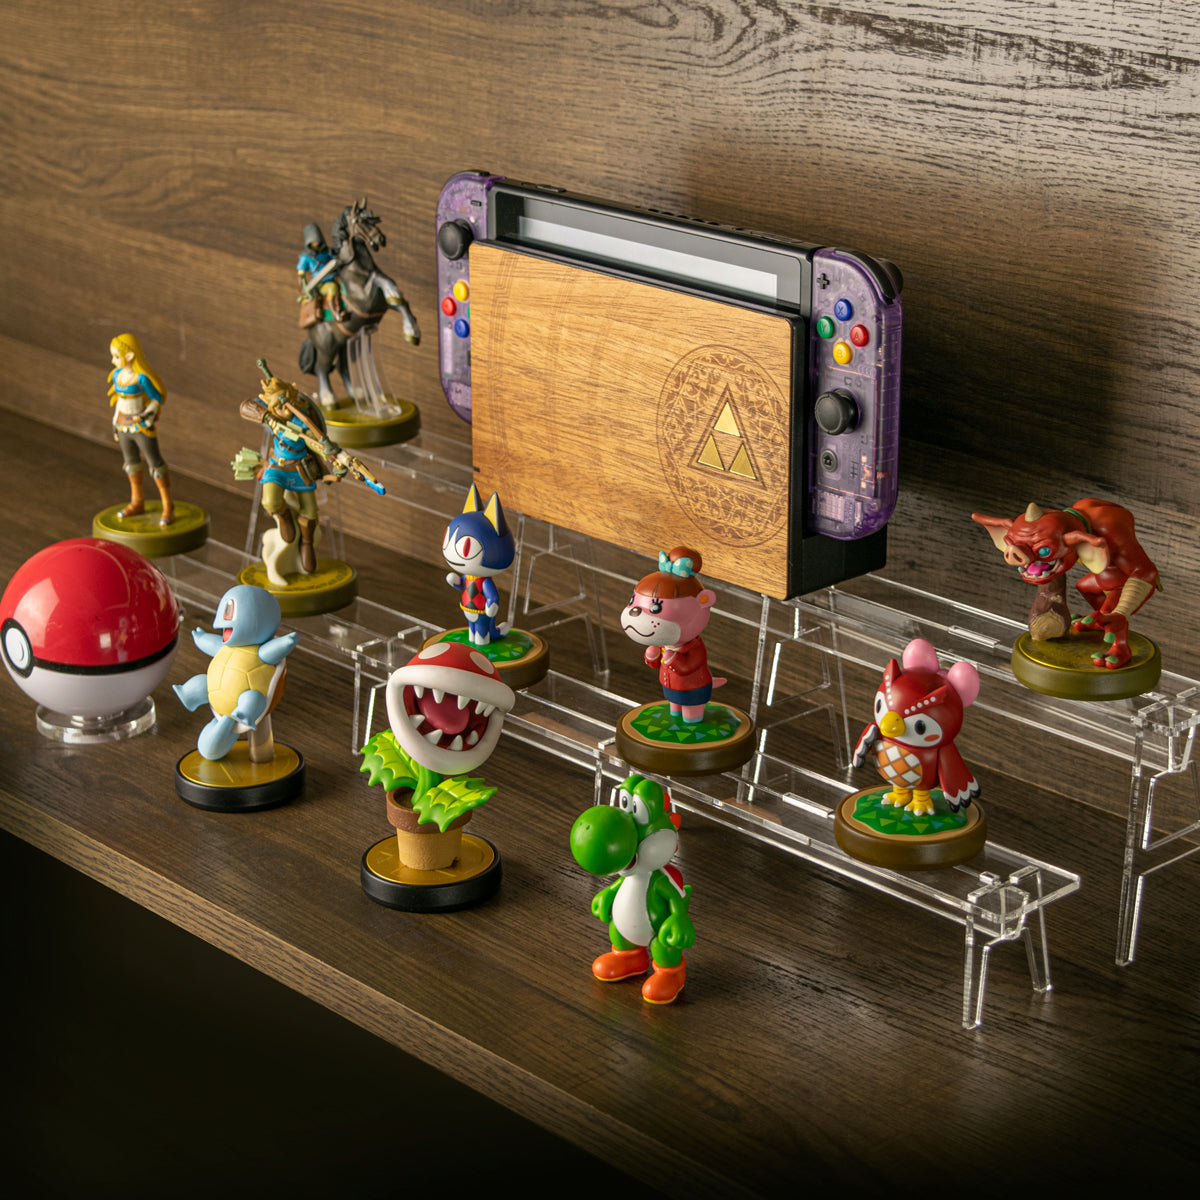 Nintendo Switch Dock Pokémon-Themed Wood Veneer – Rose Colored Gaming